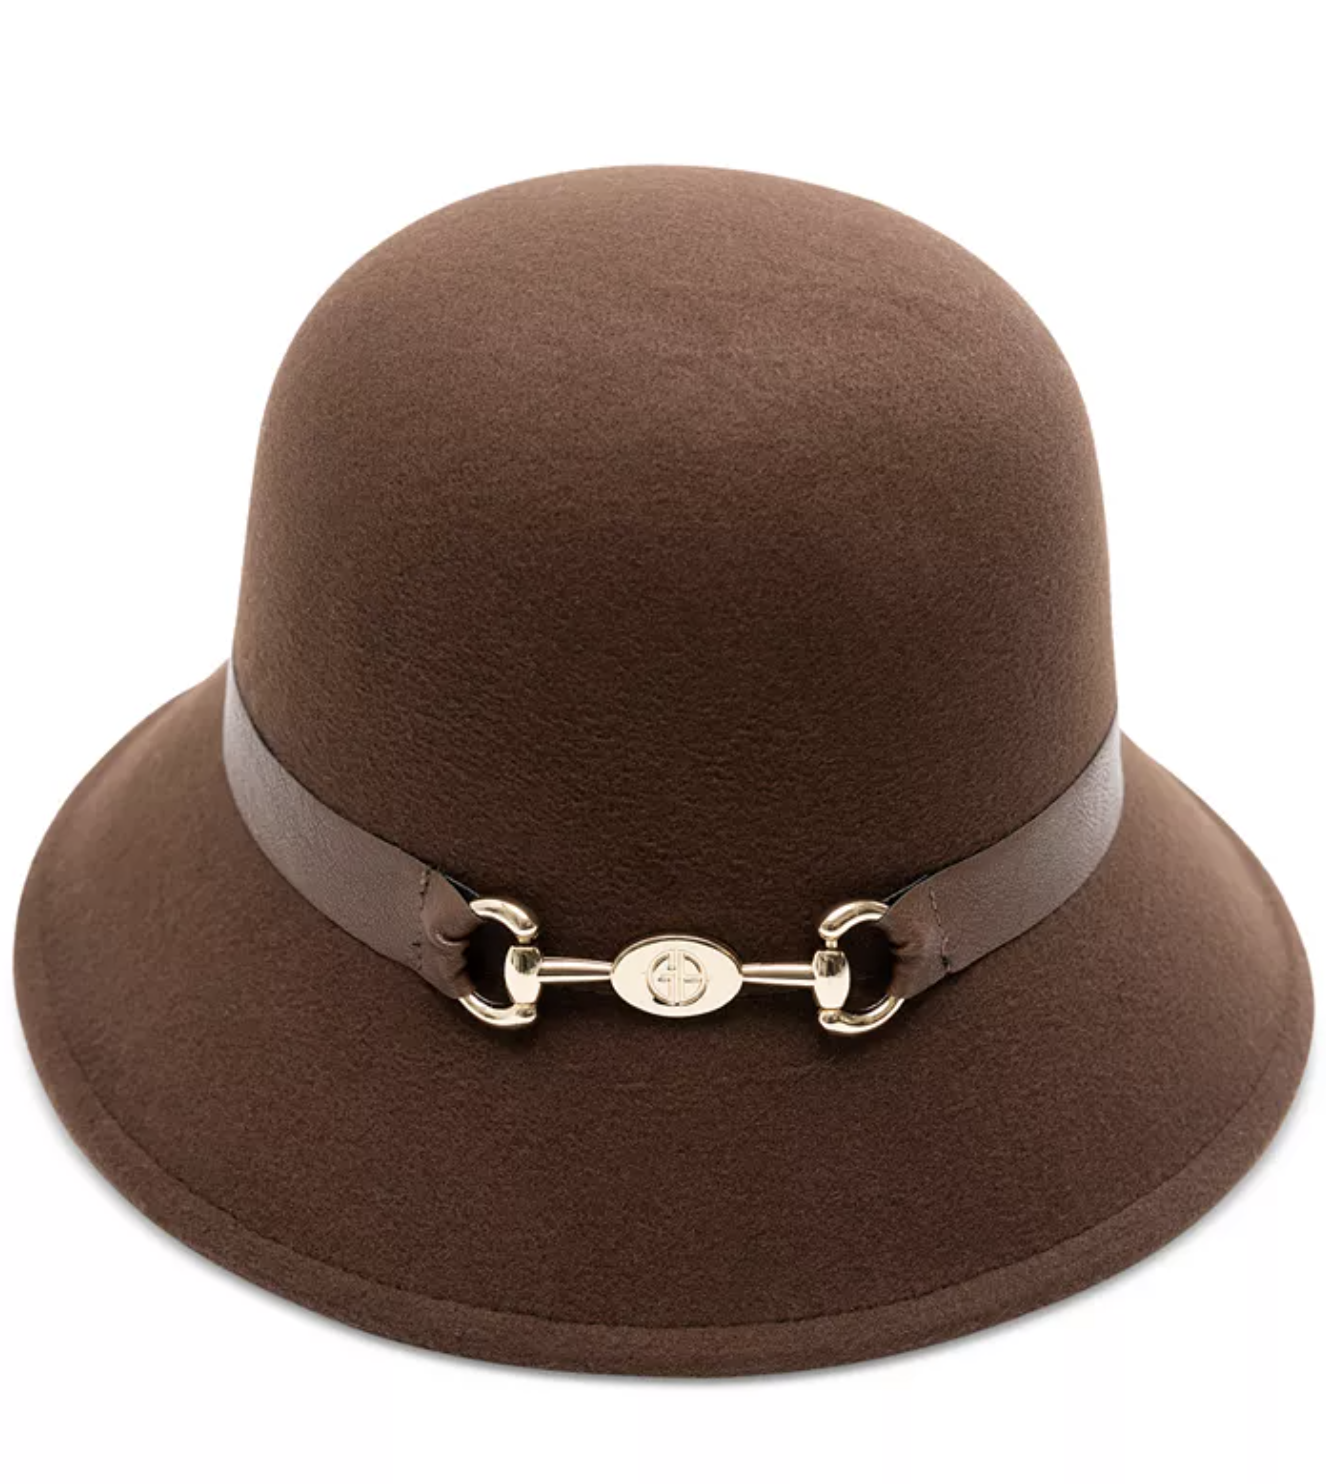 Giani Bernini Women's Embellished Felt Cloche Hat